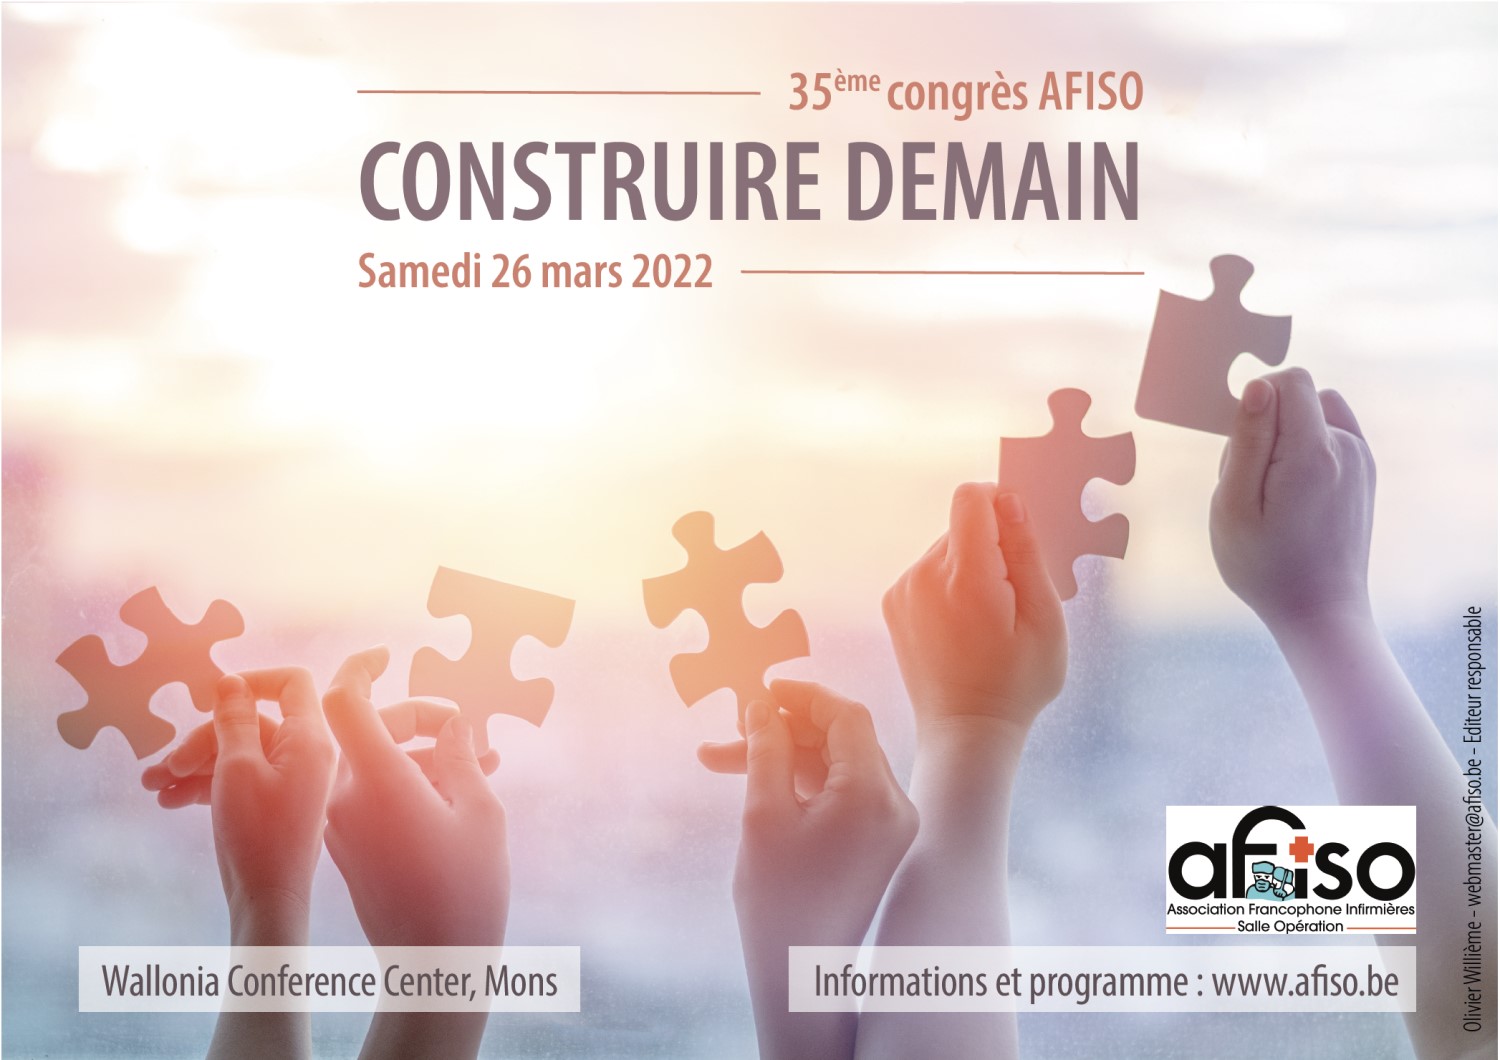 Samedi 26 mars 2022 - 35ème congrès annuel AFISO